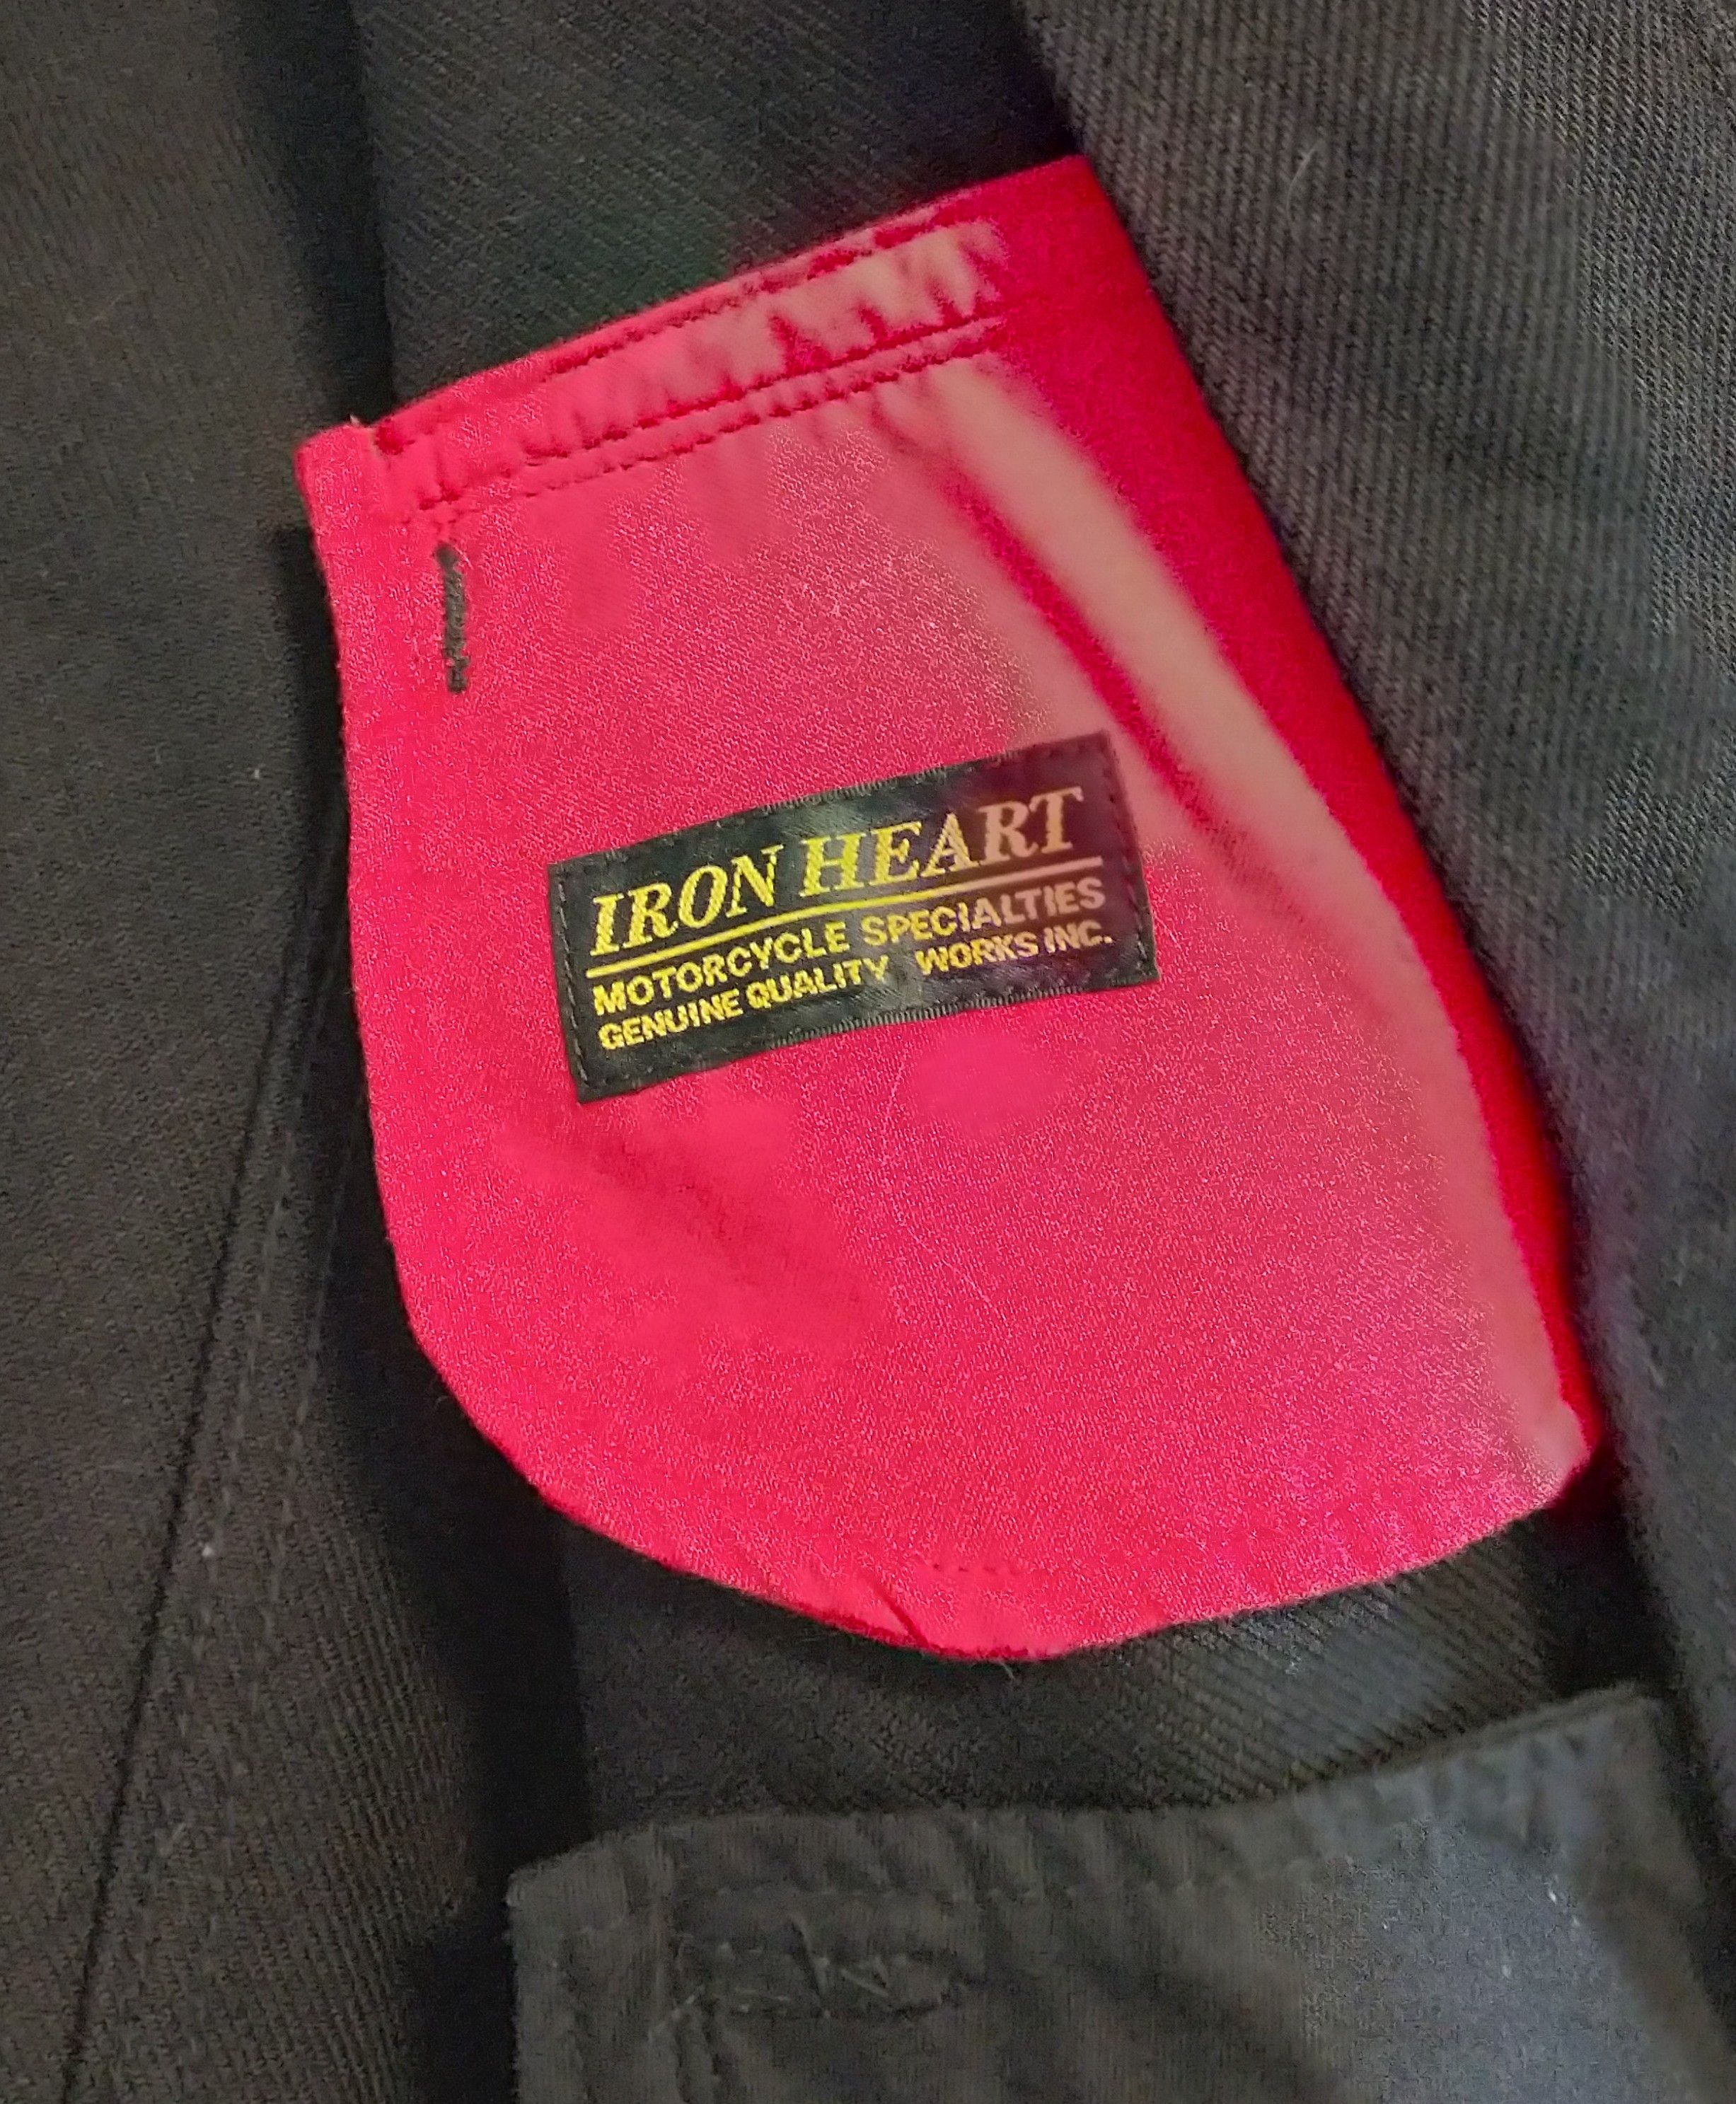 Iron Heart Iron Heart 21oz Denim Rider's Jacket Superblack Size US S / EU 44-46 / 1 - 2 Preview